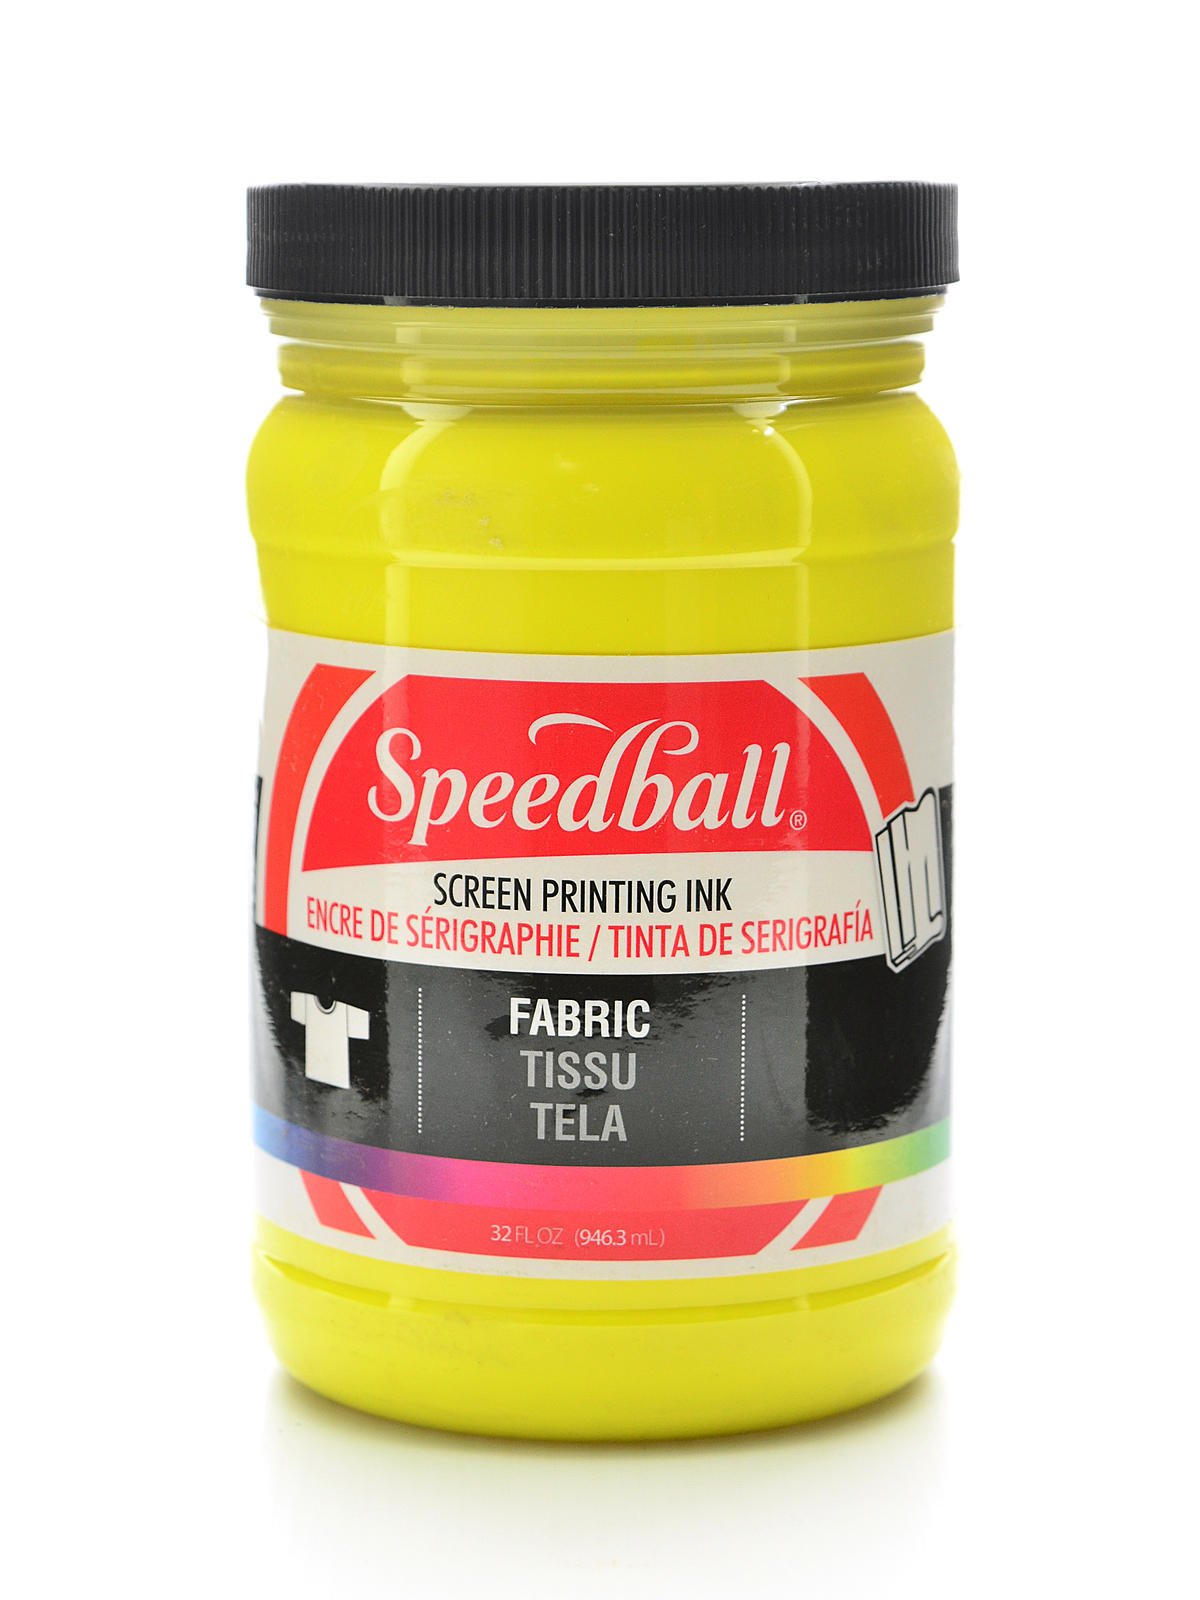 Speedball 8 oz Fabric Screen Printing Ink - Yellow